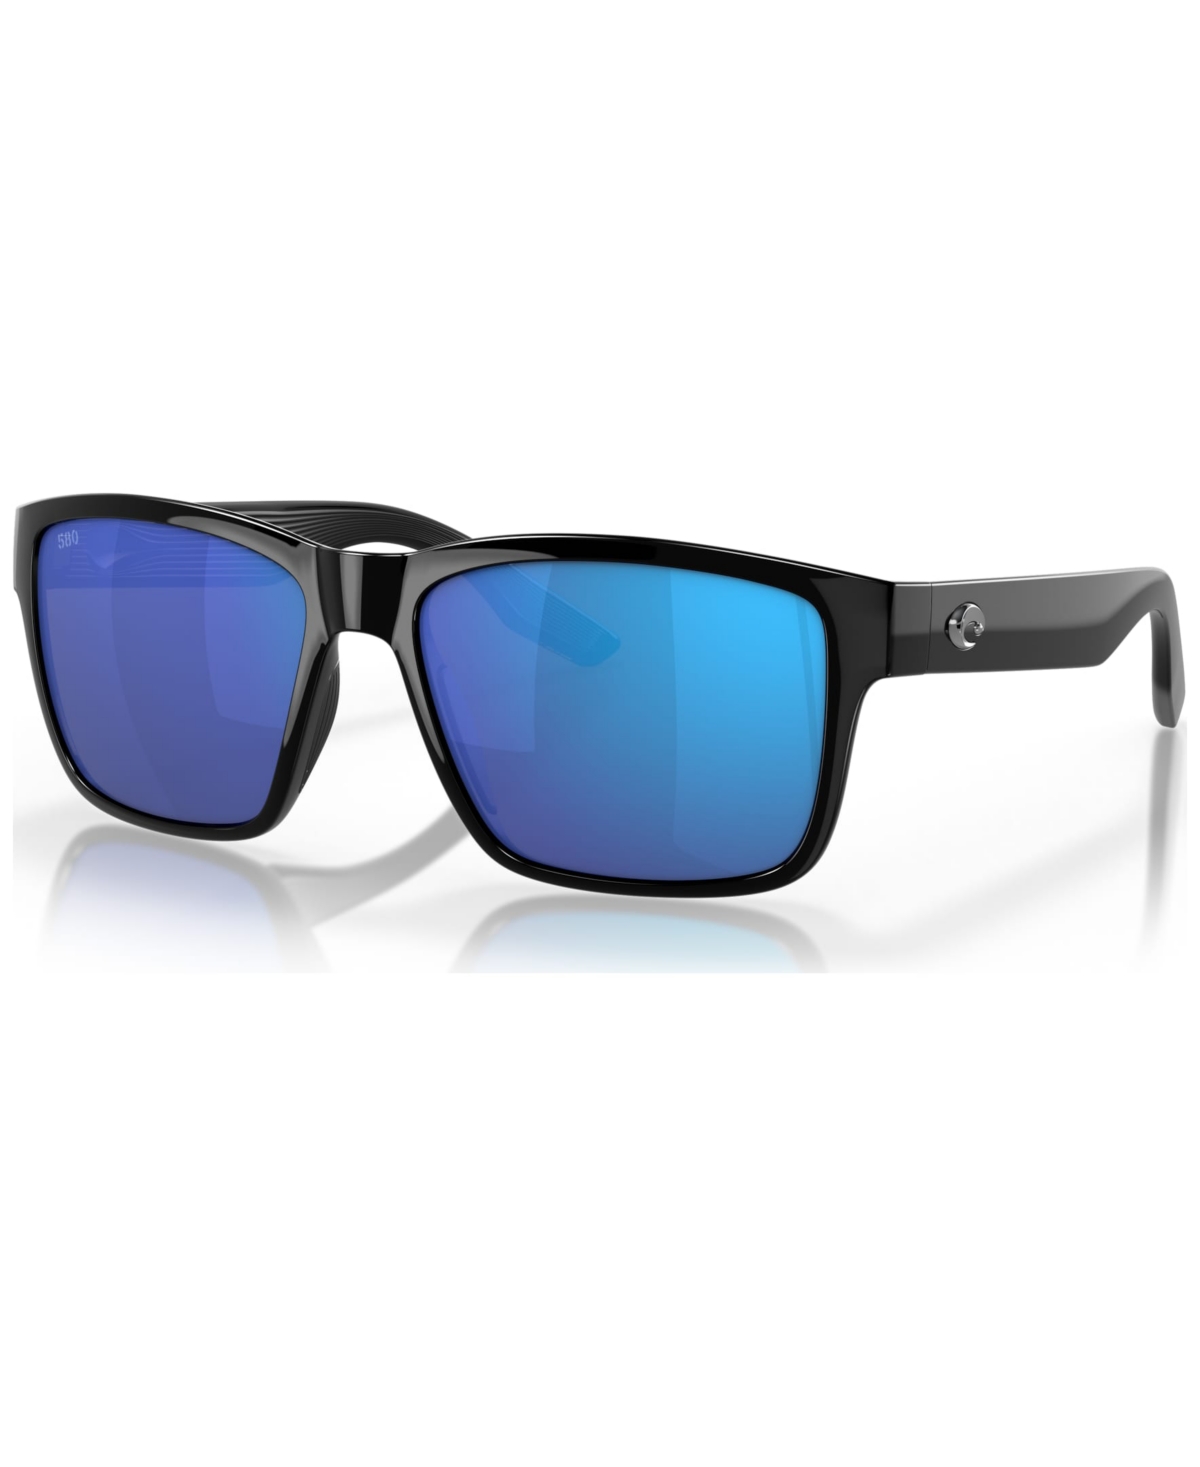 Men's Paunch Polarized Sunglasses, Mirror Polar 6S9049 - Black